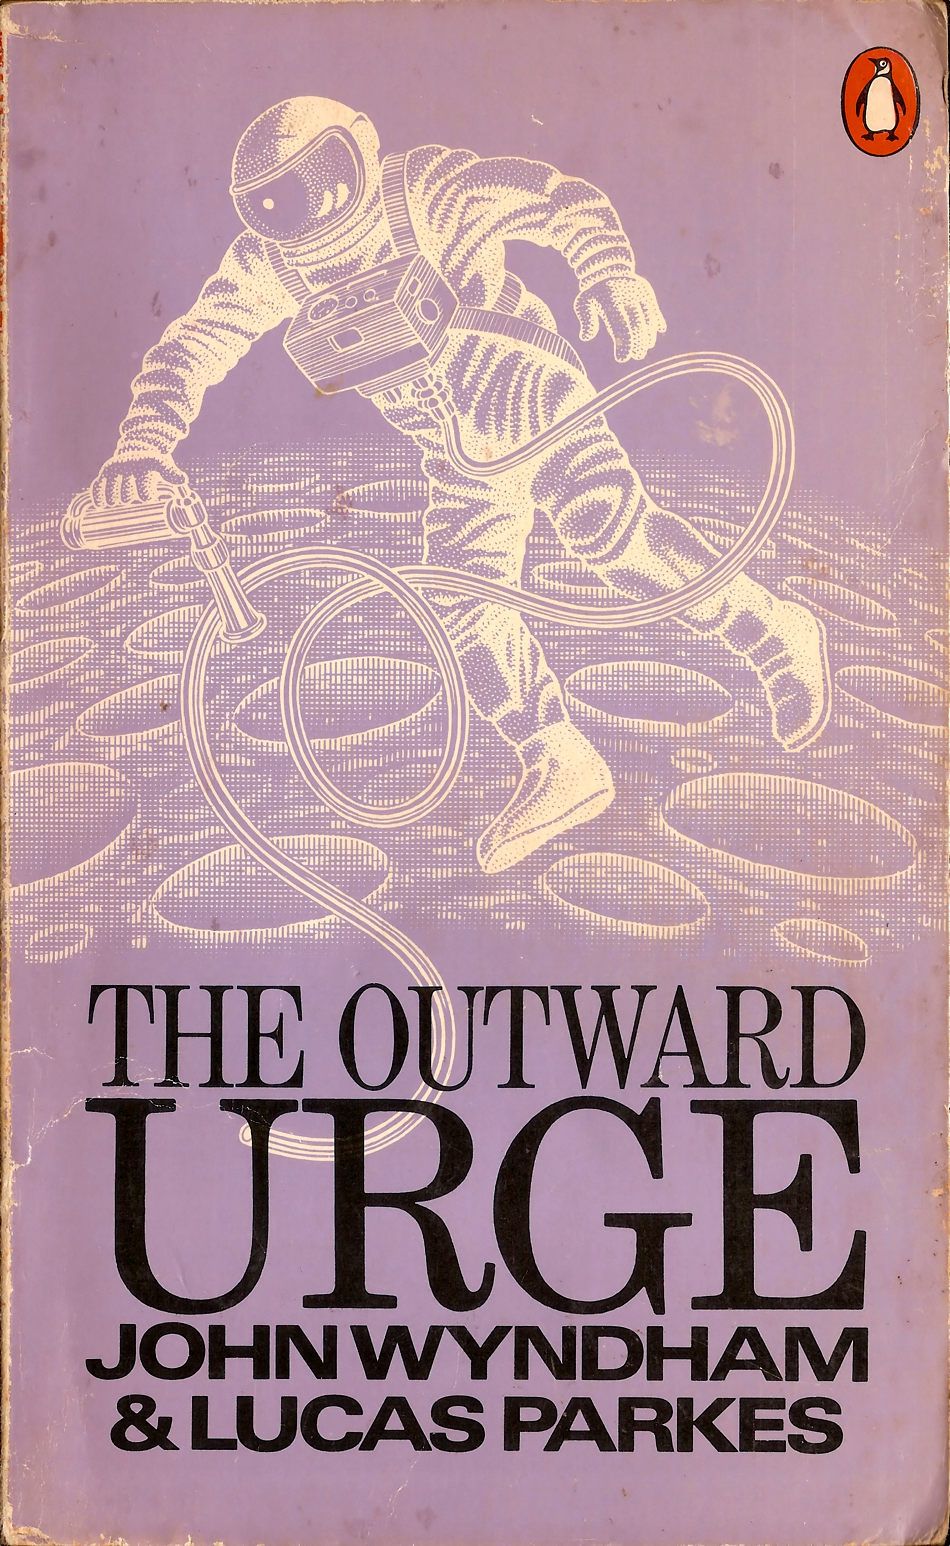 The Outward Urge (1959, Michael Joseph)